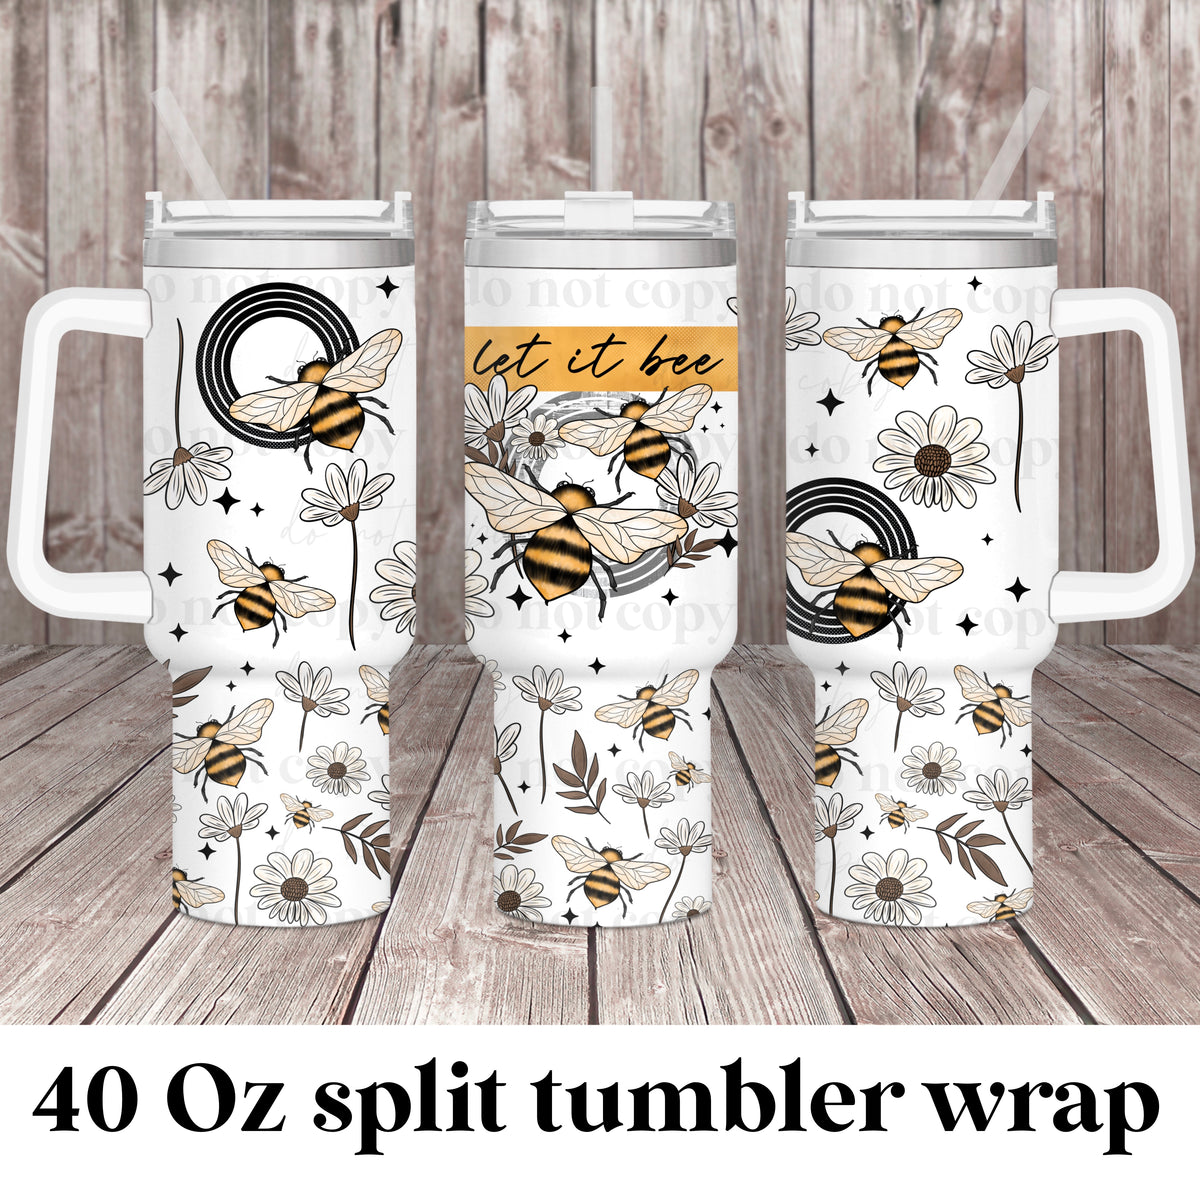 Let it bee 40 Oz wrap